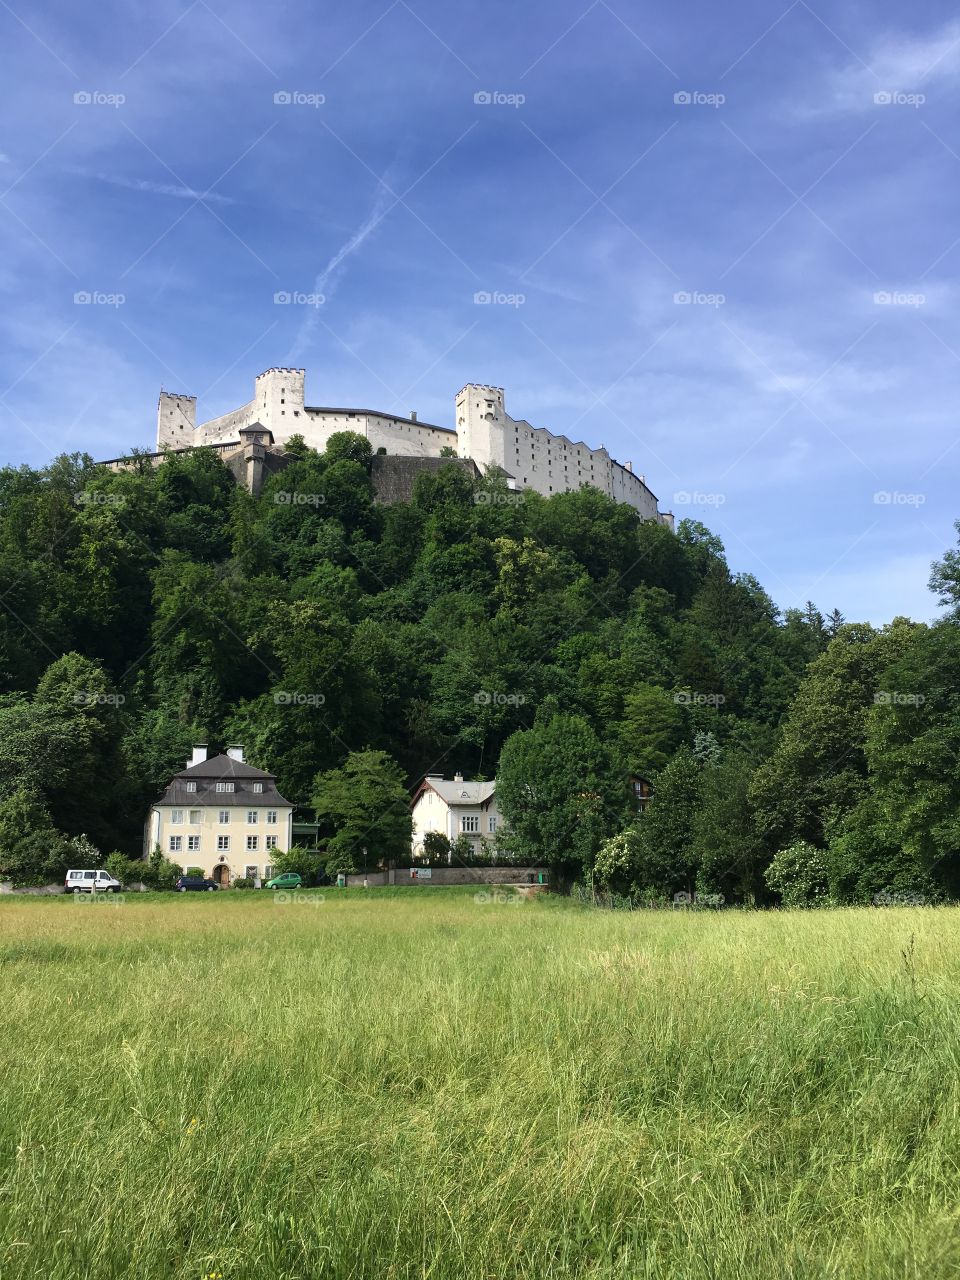 Salzburg, Austria - The Fortress